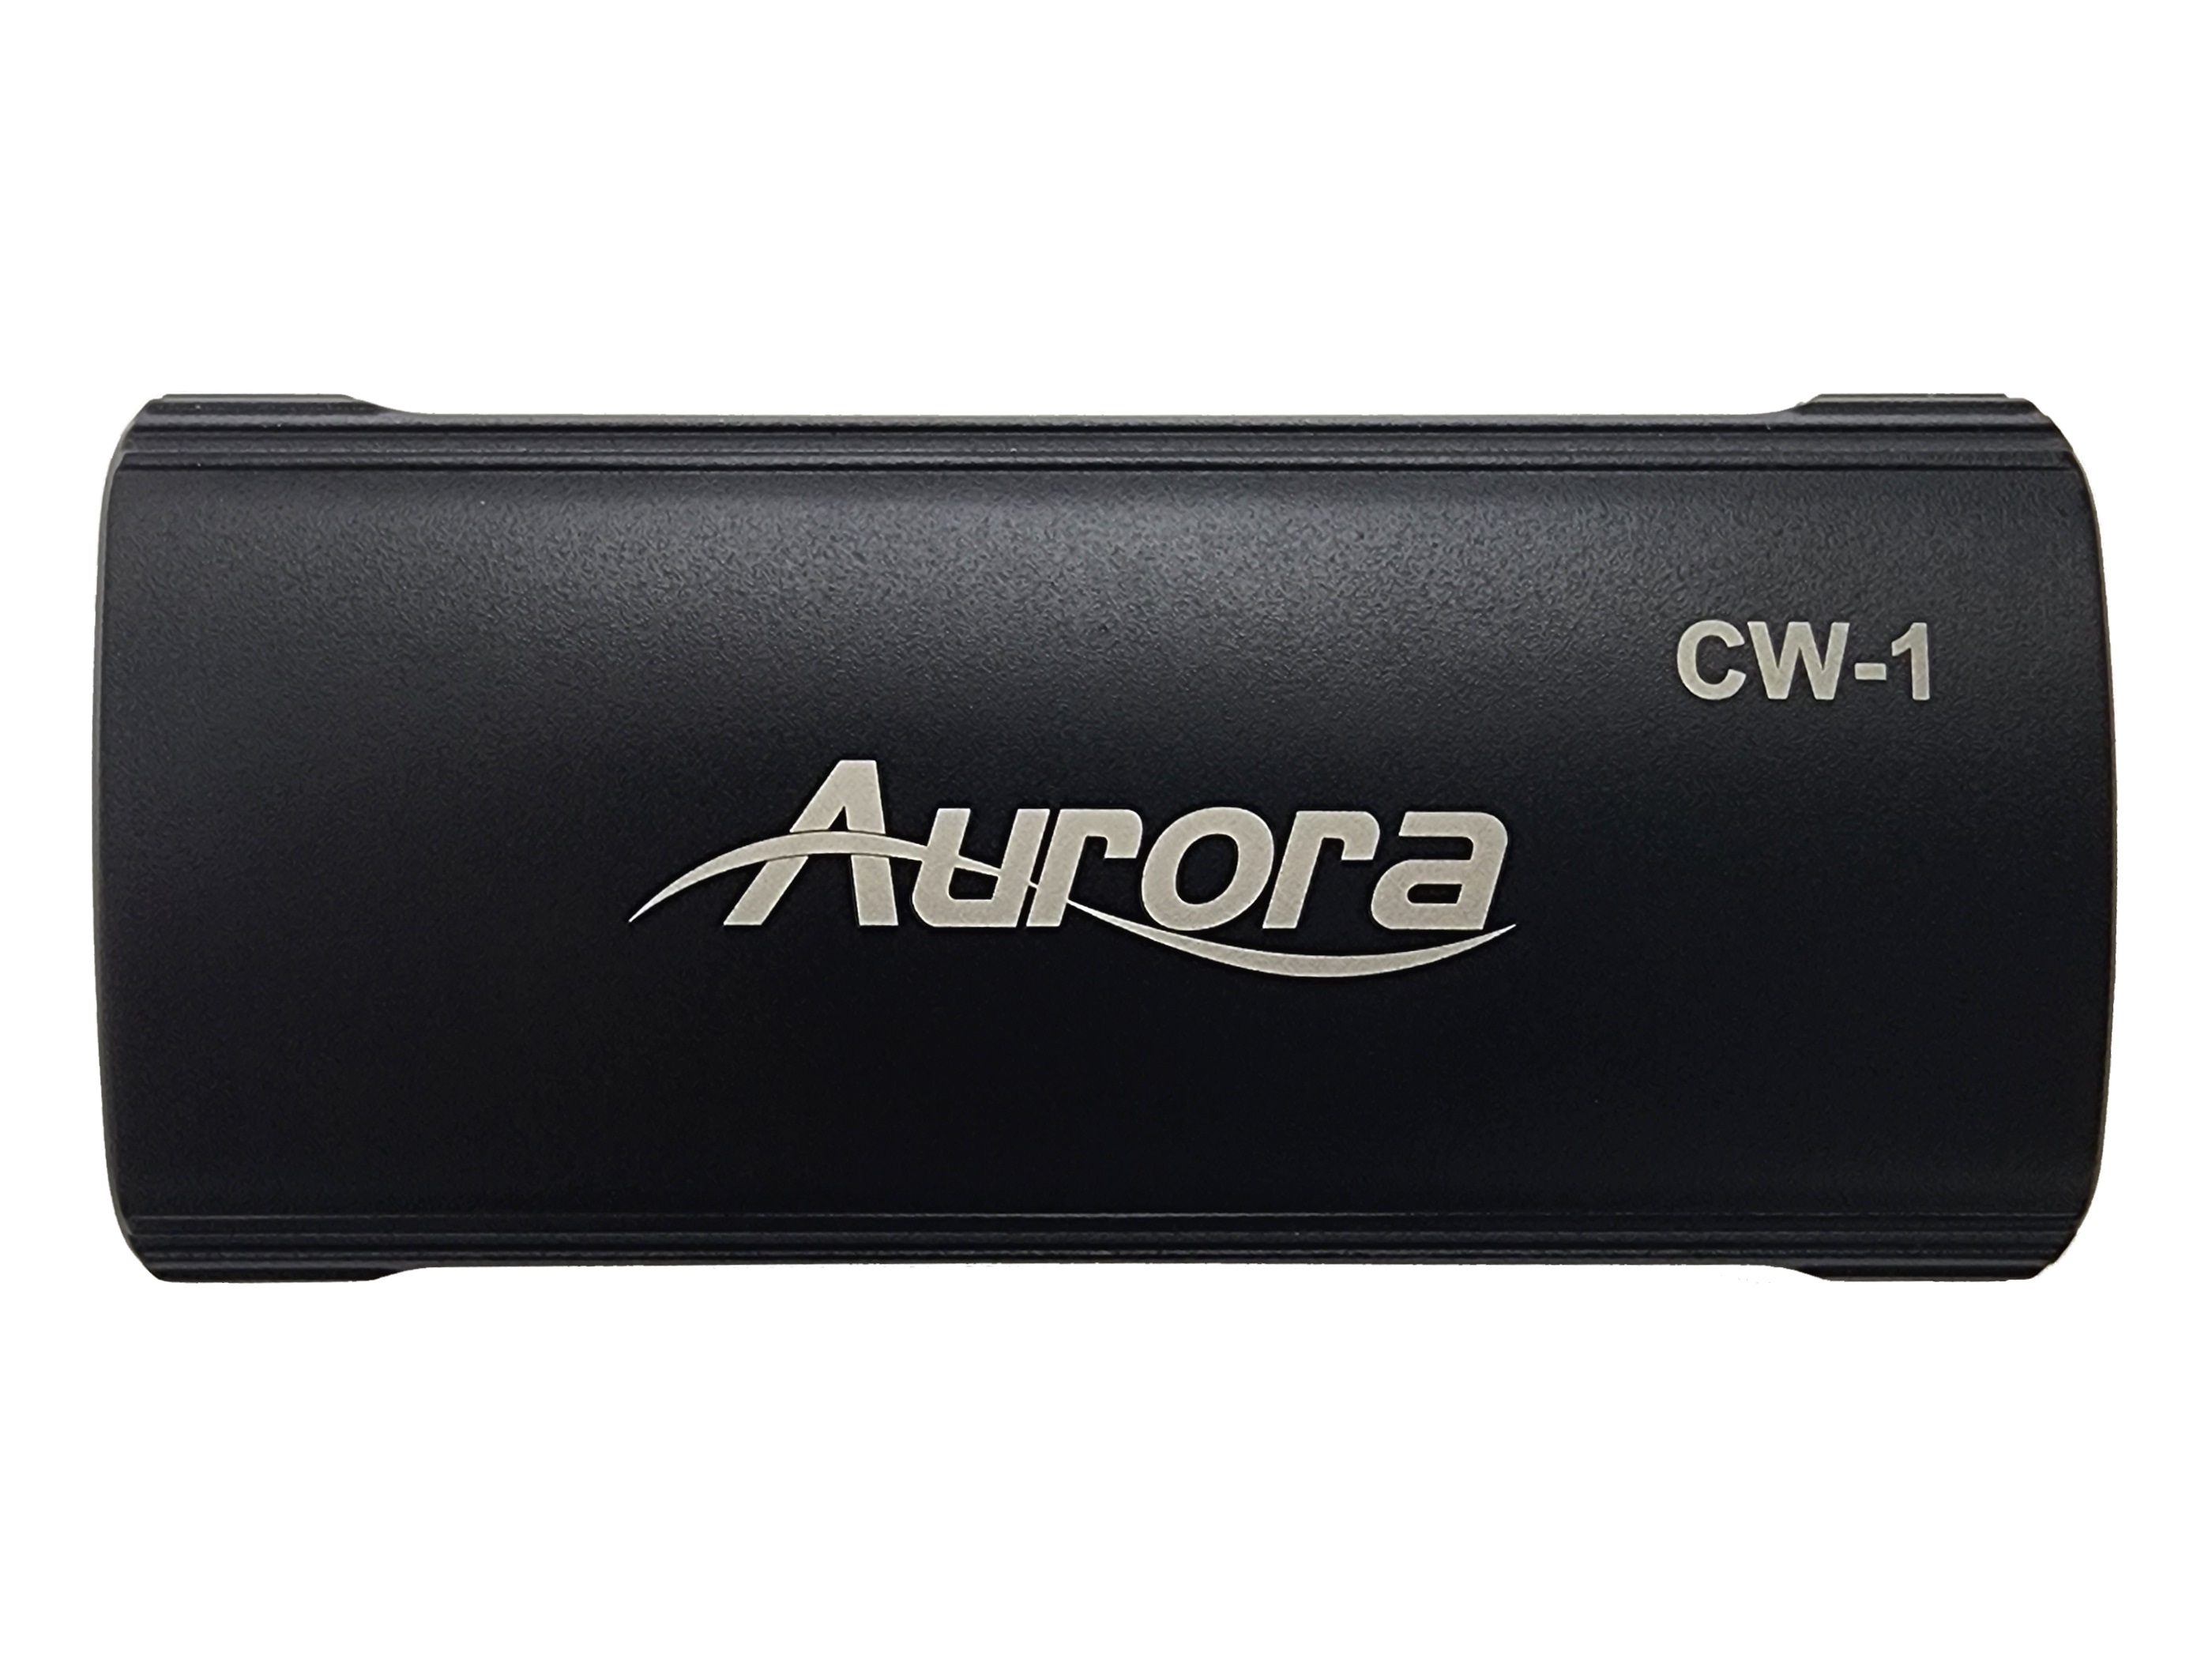 CW-1 HDMI 1.4b to USB 3.1 4K Converter by Aurora Multimedia